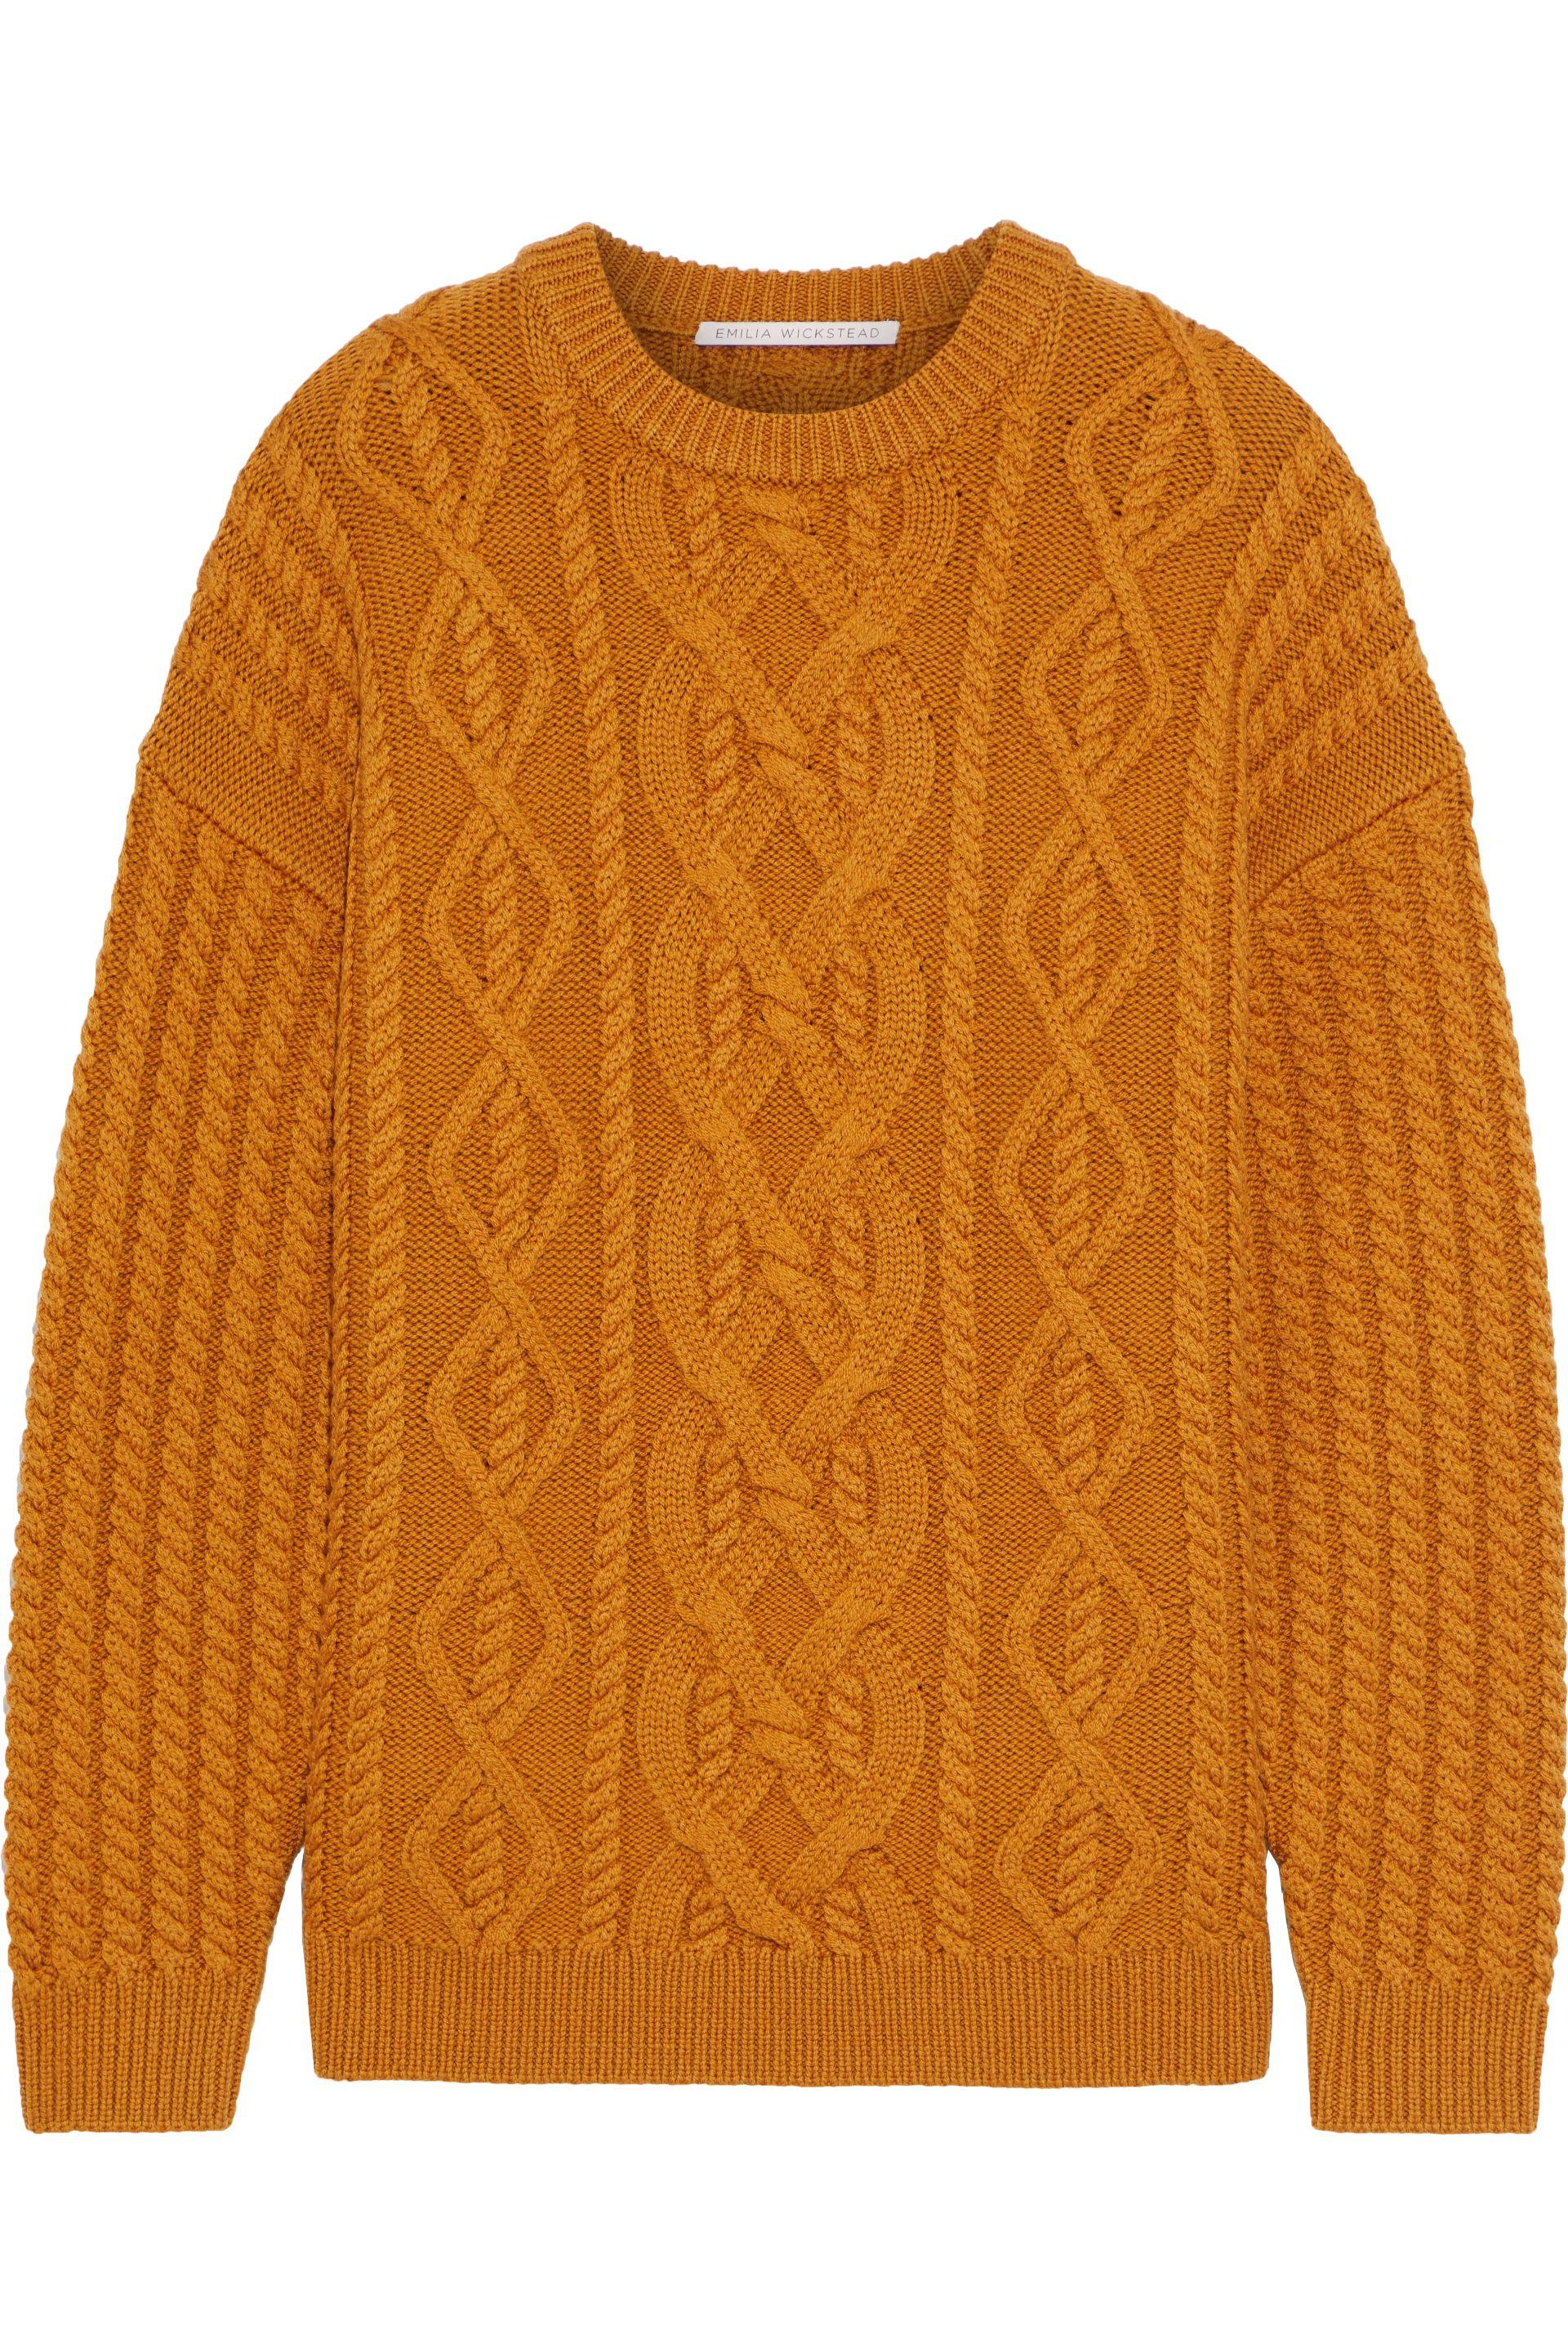 Emilia Wickstead Kobe Cable-knit Wool Sweater Mustard - Lyst